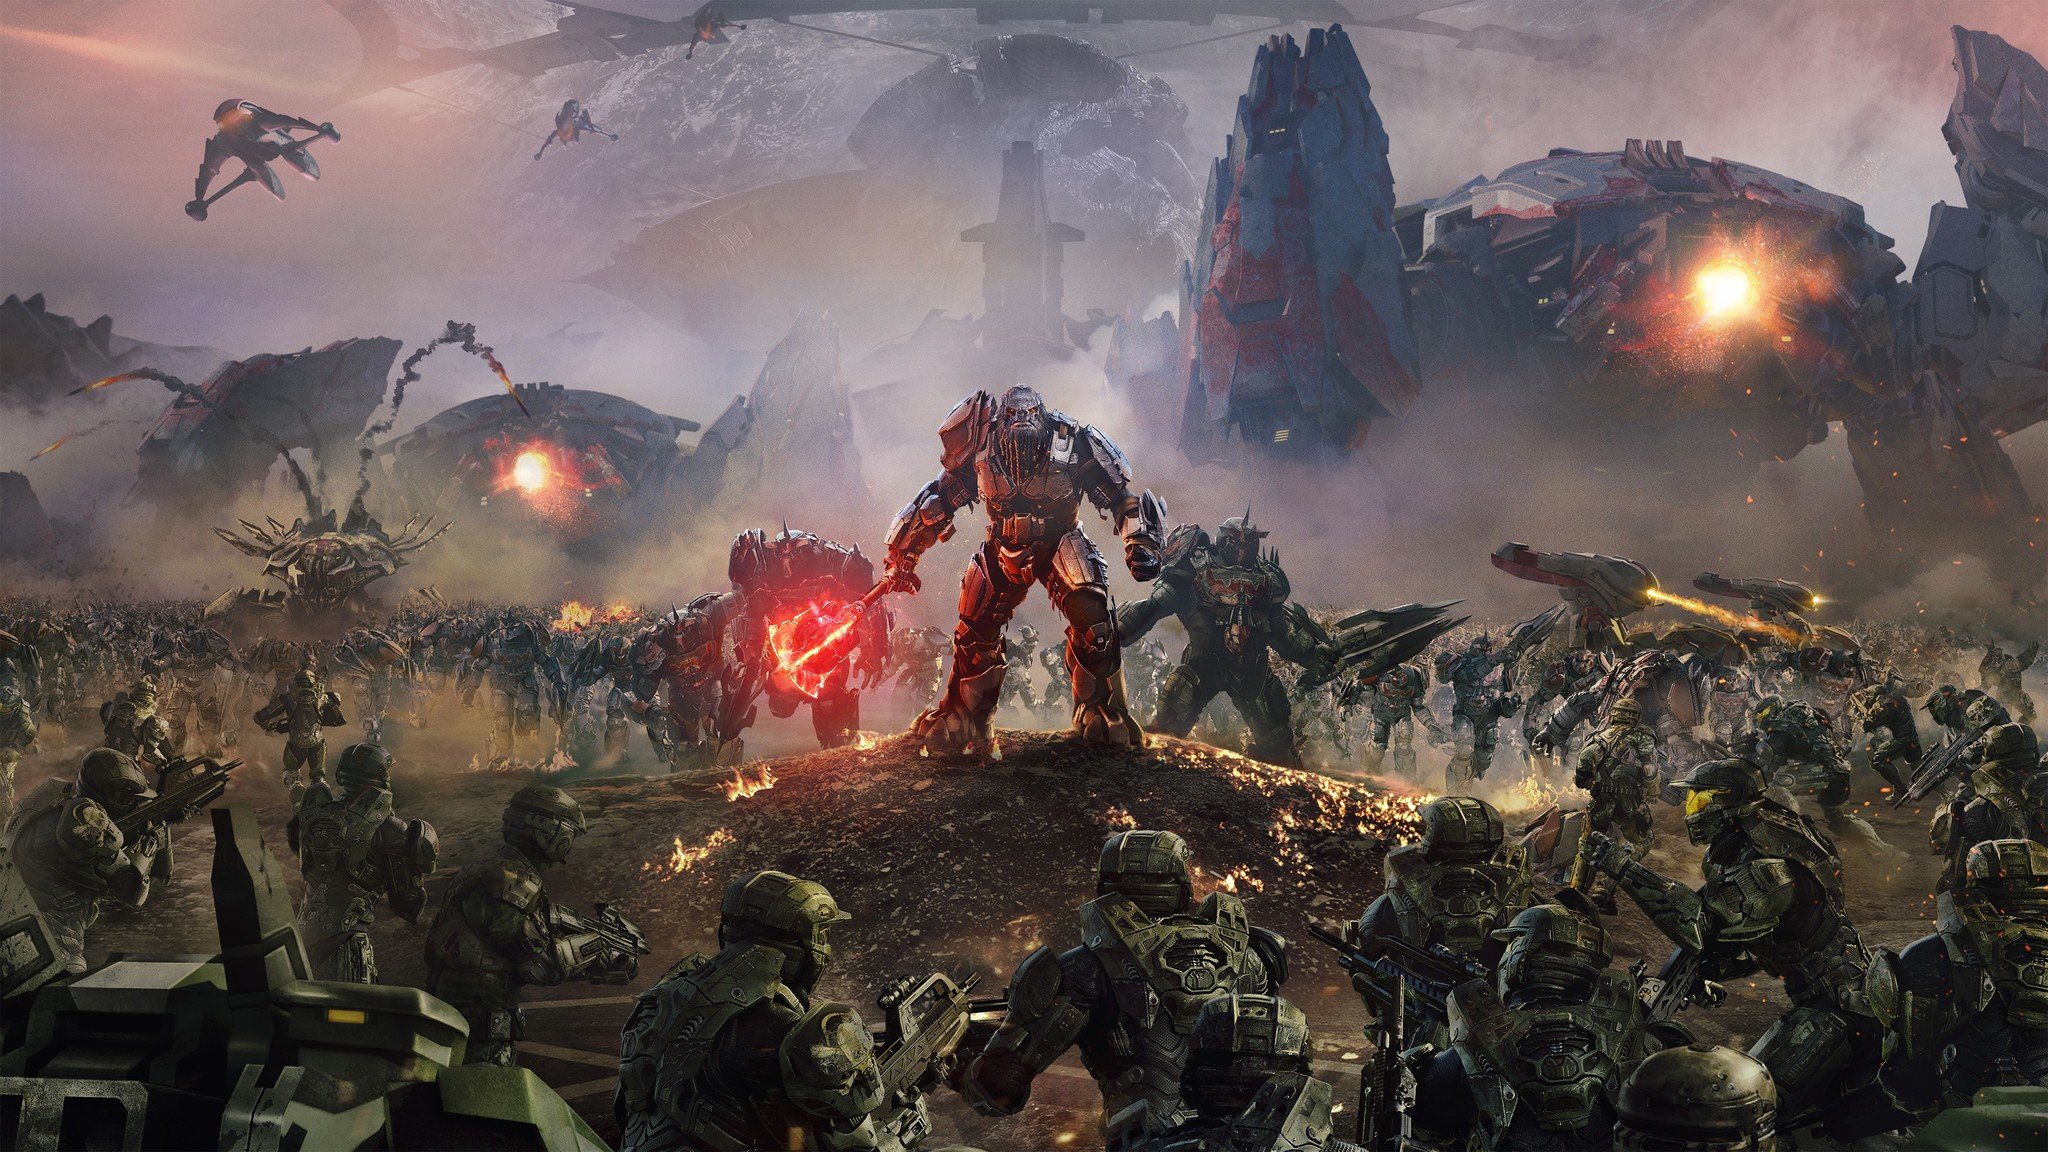 Official Halo Wars 2 artwork.